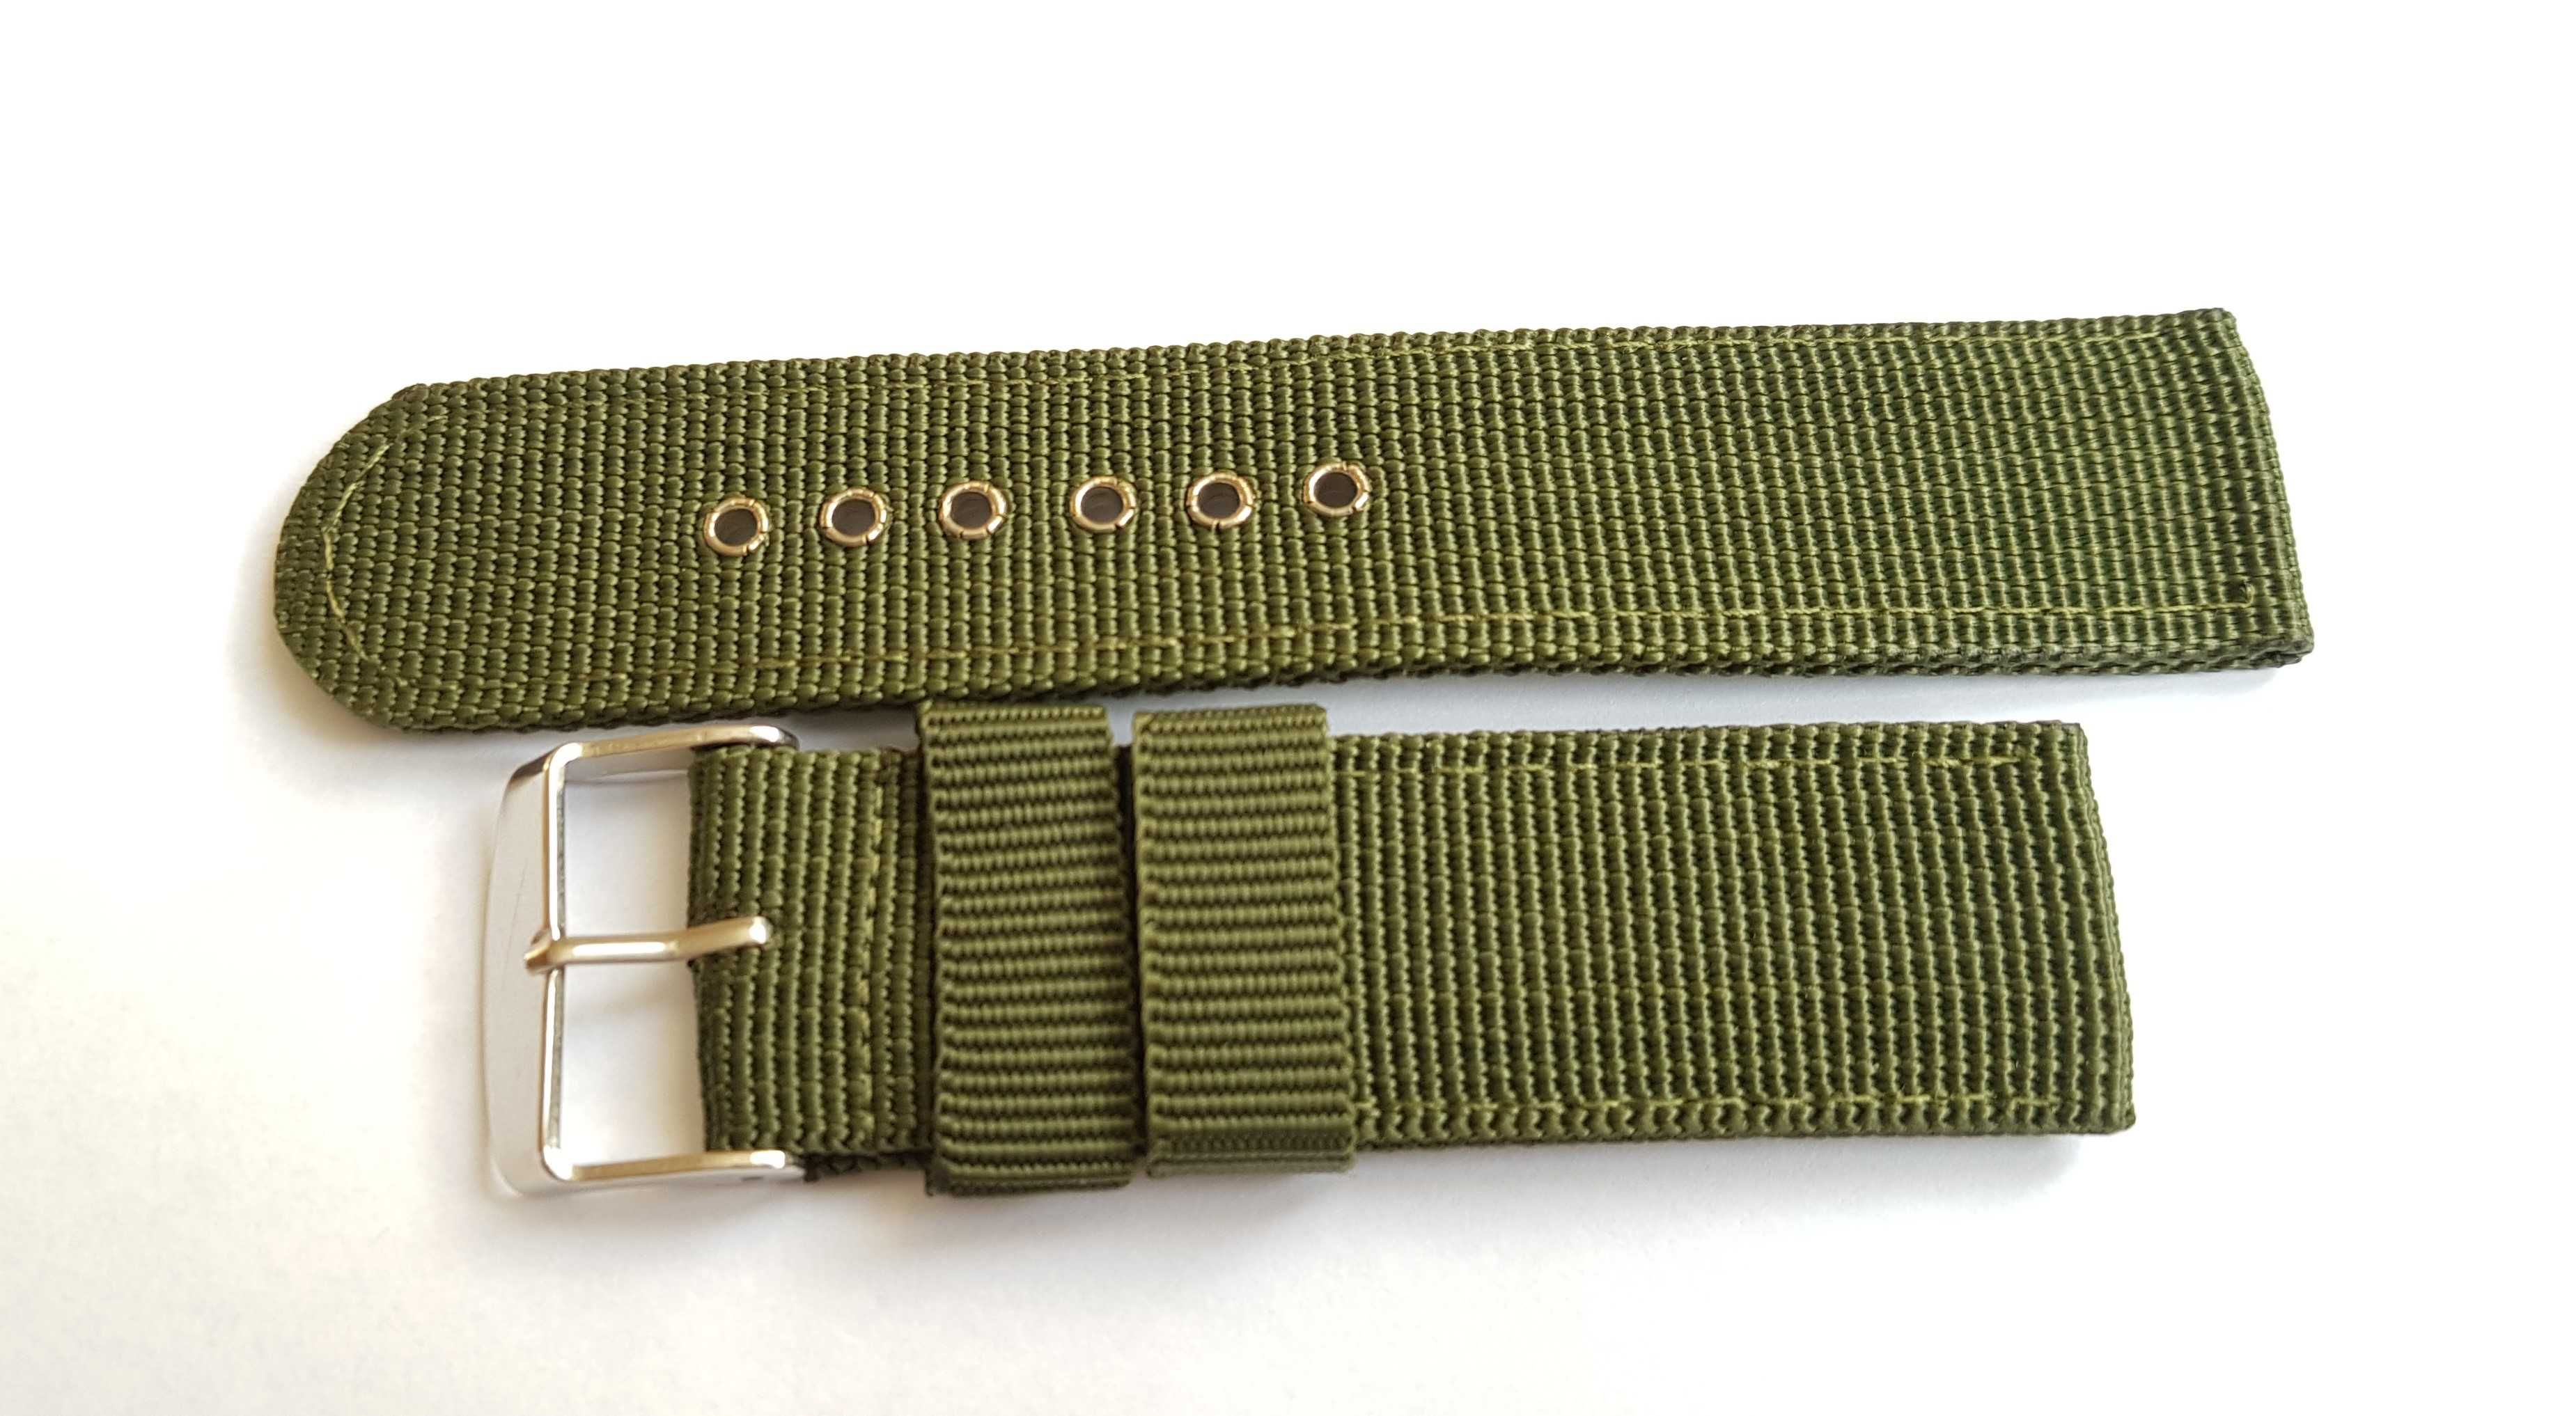 Pasek do zegarka parciany nylonowy military khaki zielony 22 mm